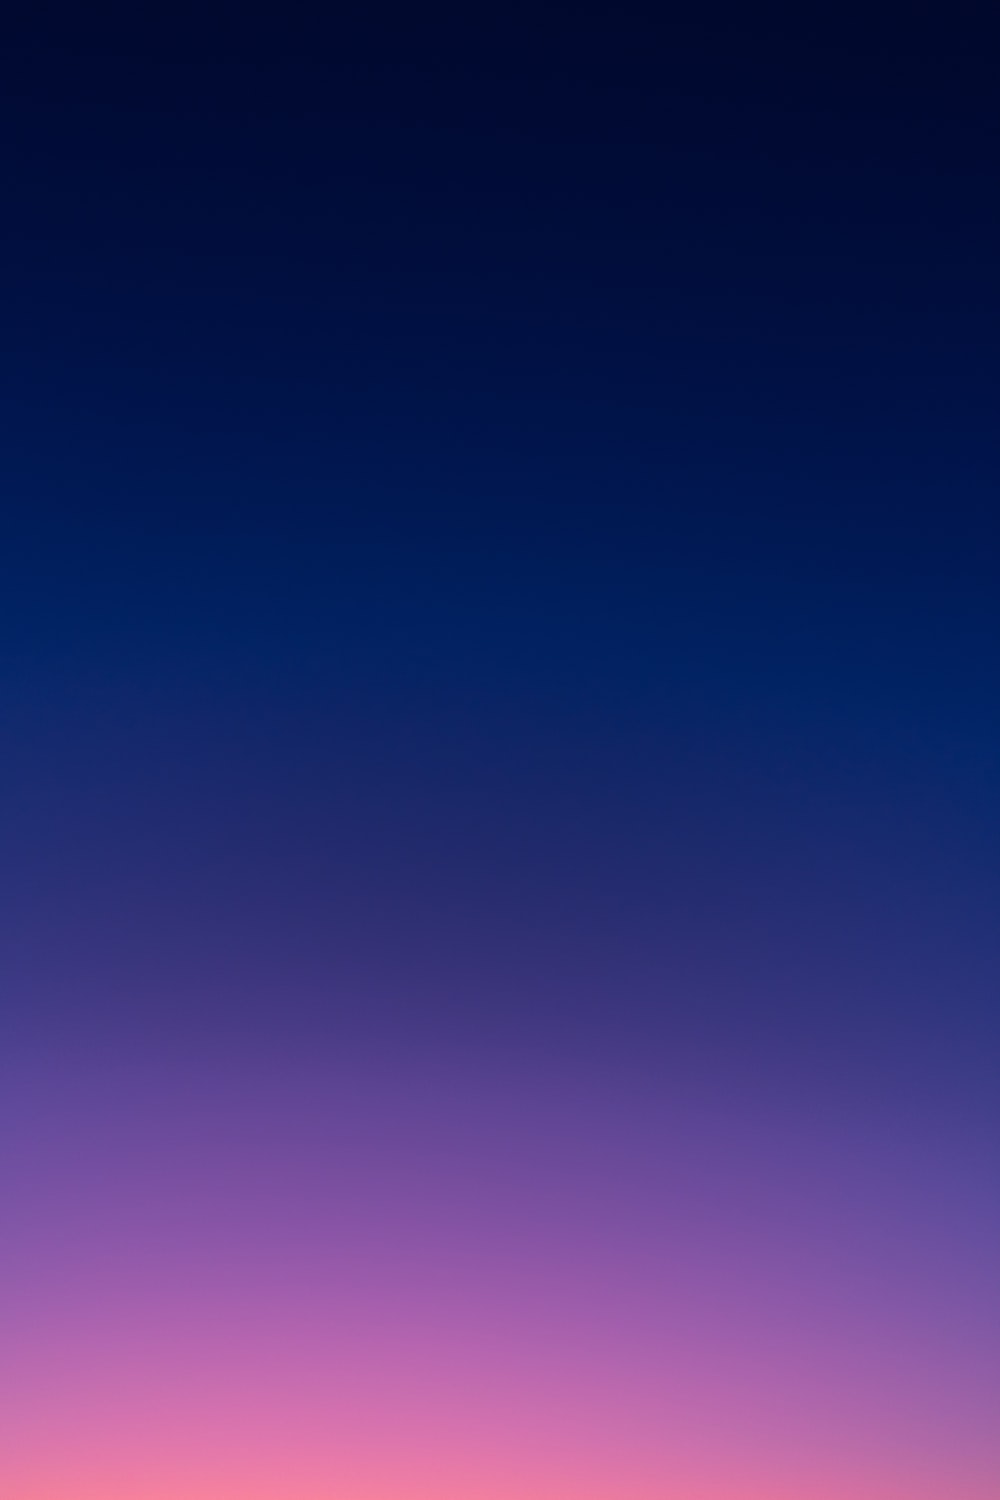 Purple Gradient Picture. Download Free Image